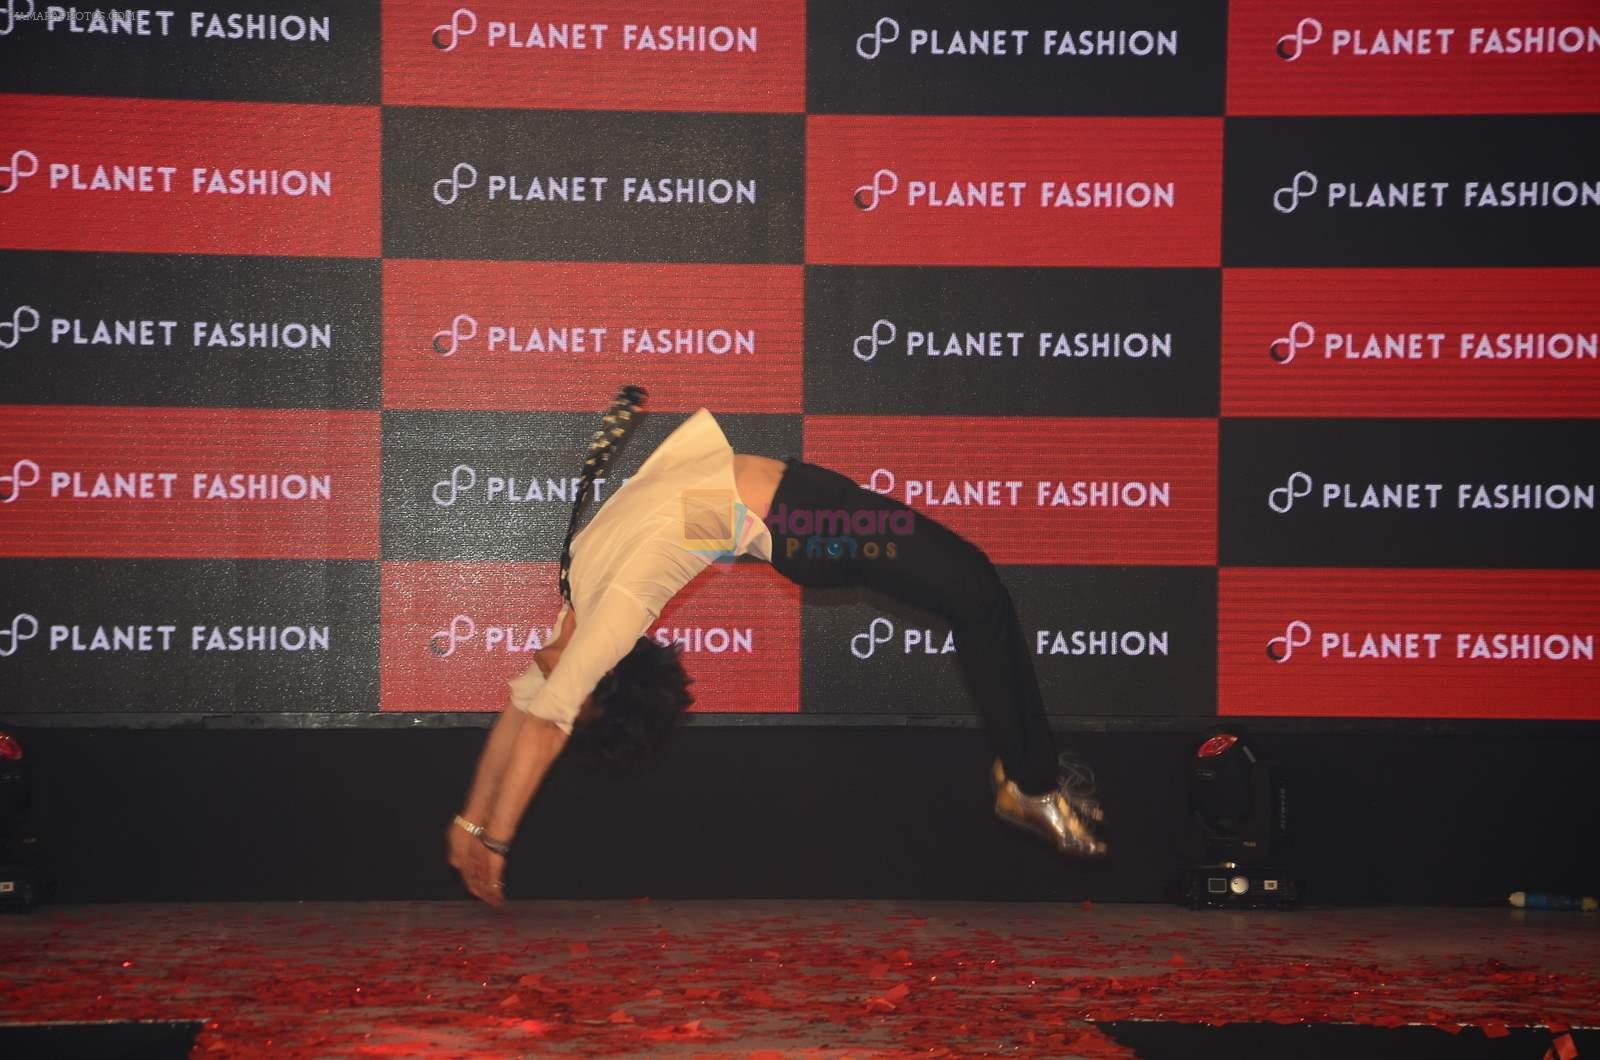 Tiger Shroff at Planet Fashion show in Taj Lands End on 1st July 2015